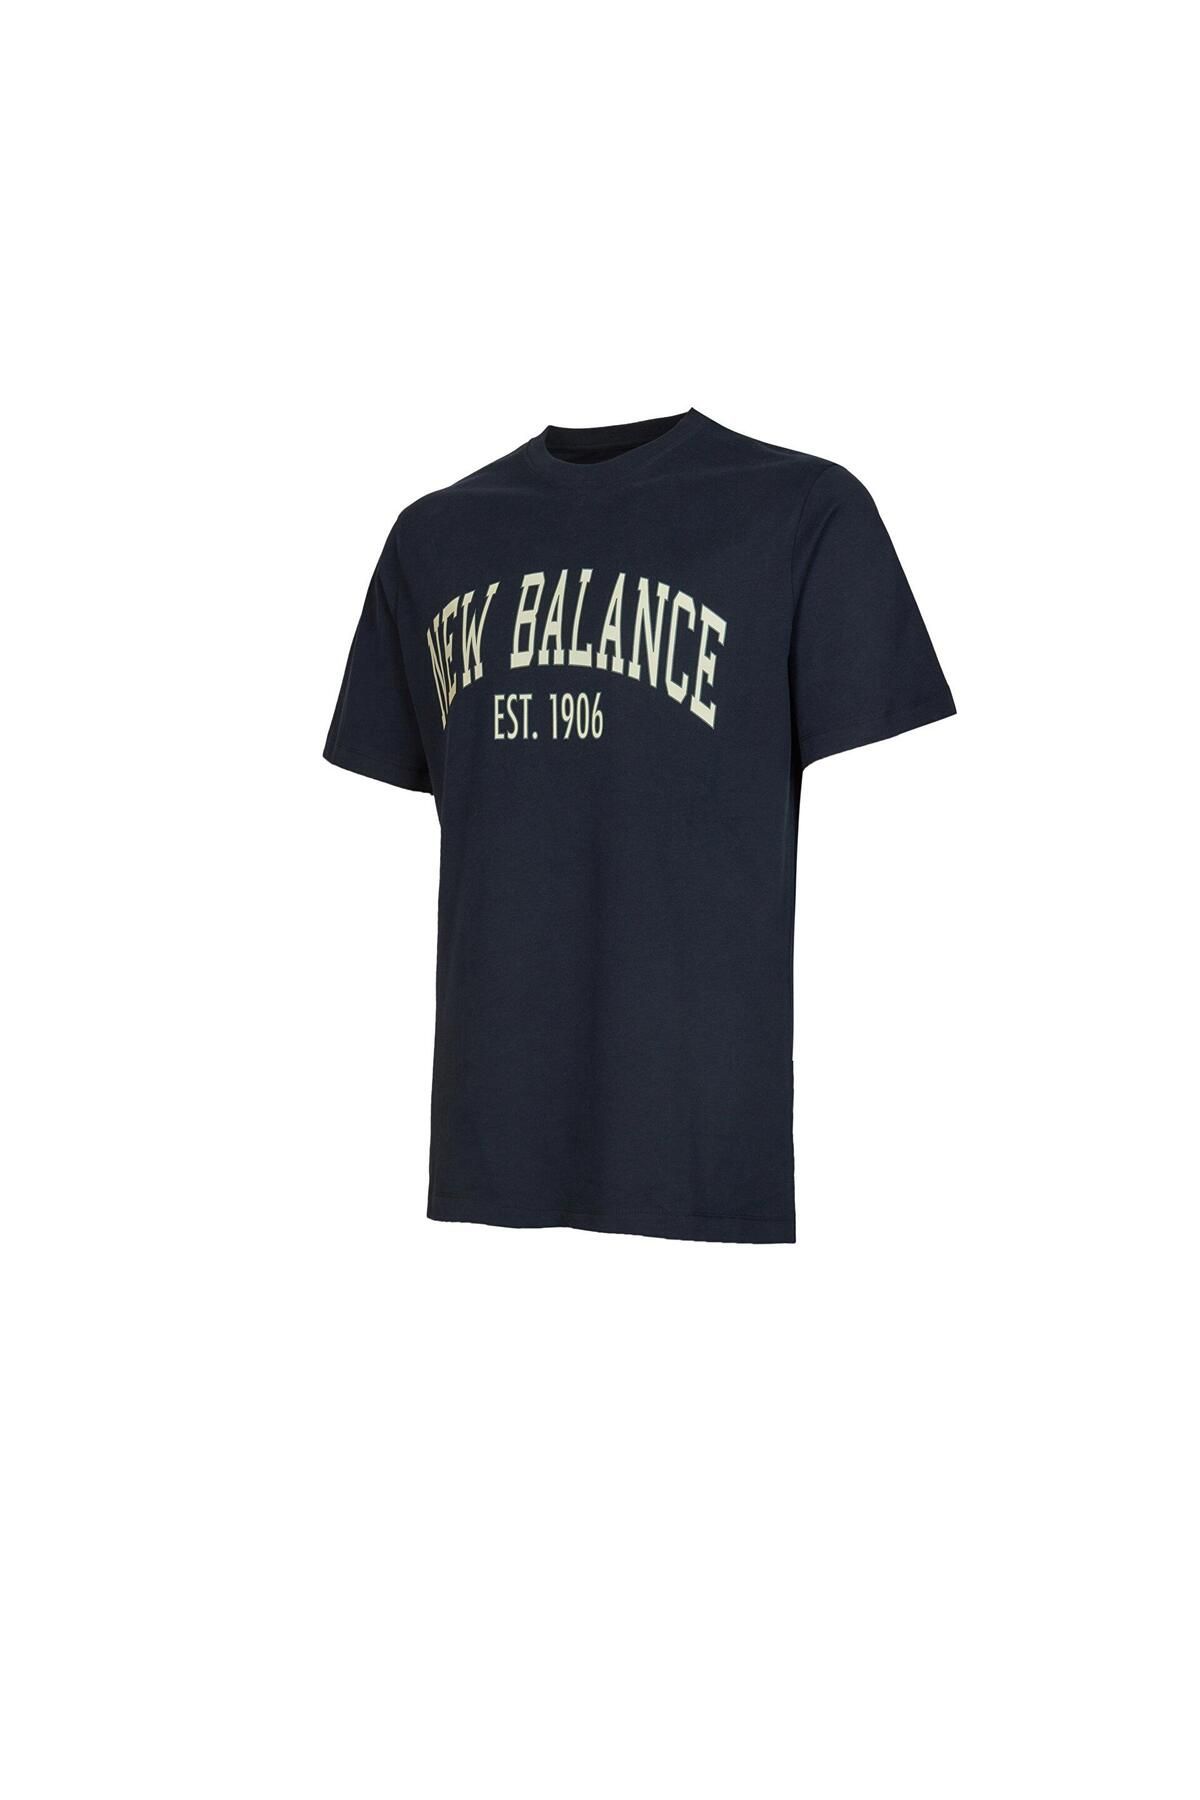 New Balance Nb Lifestyle Men T-shirt Erkek Lacivert Tshirt Mnt3326-avı